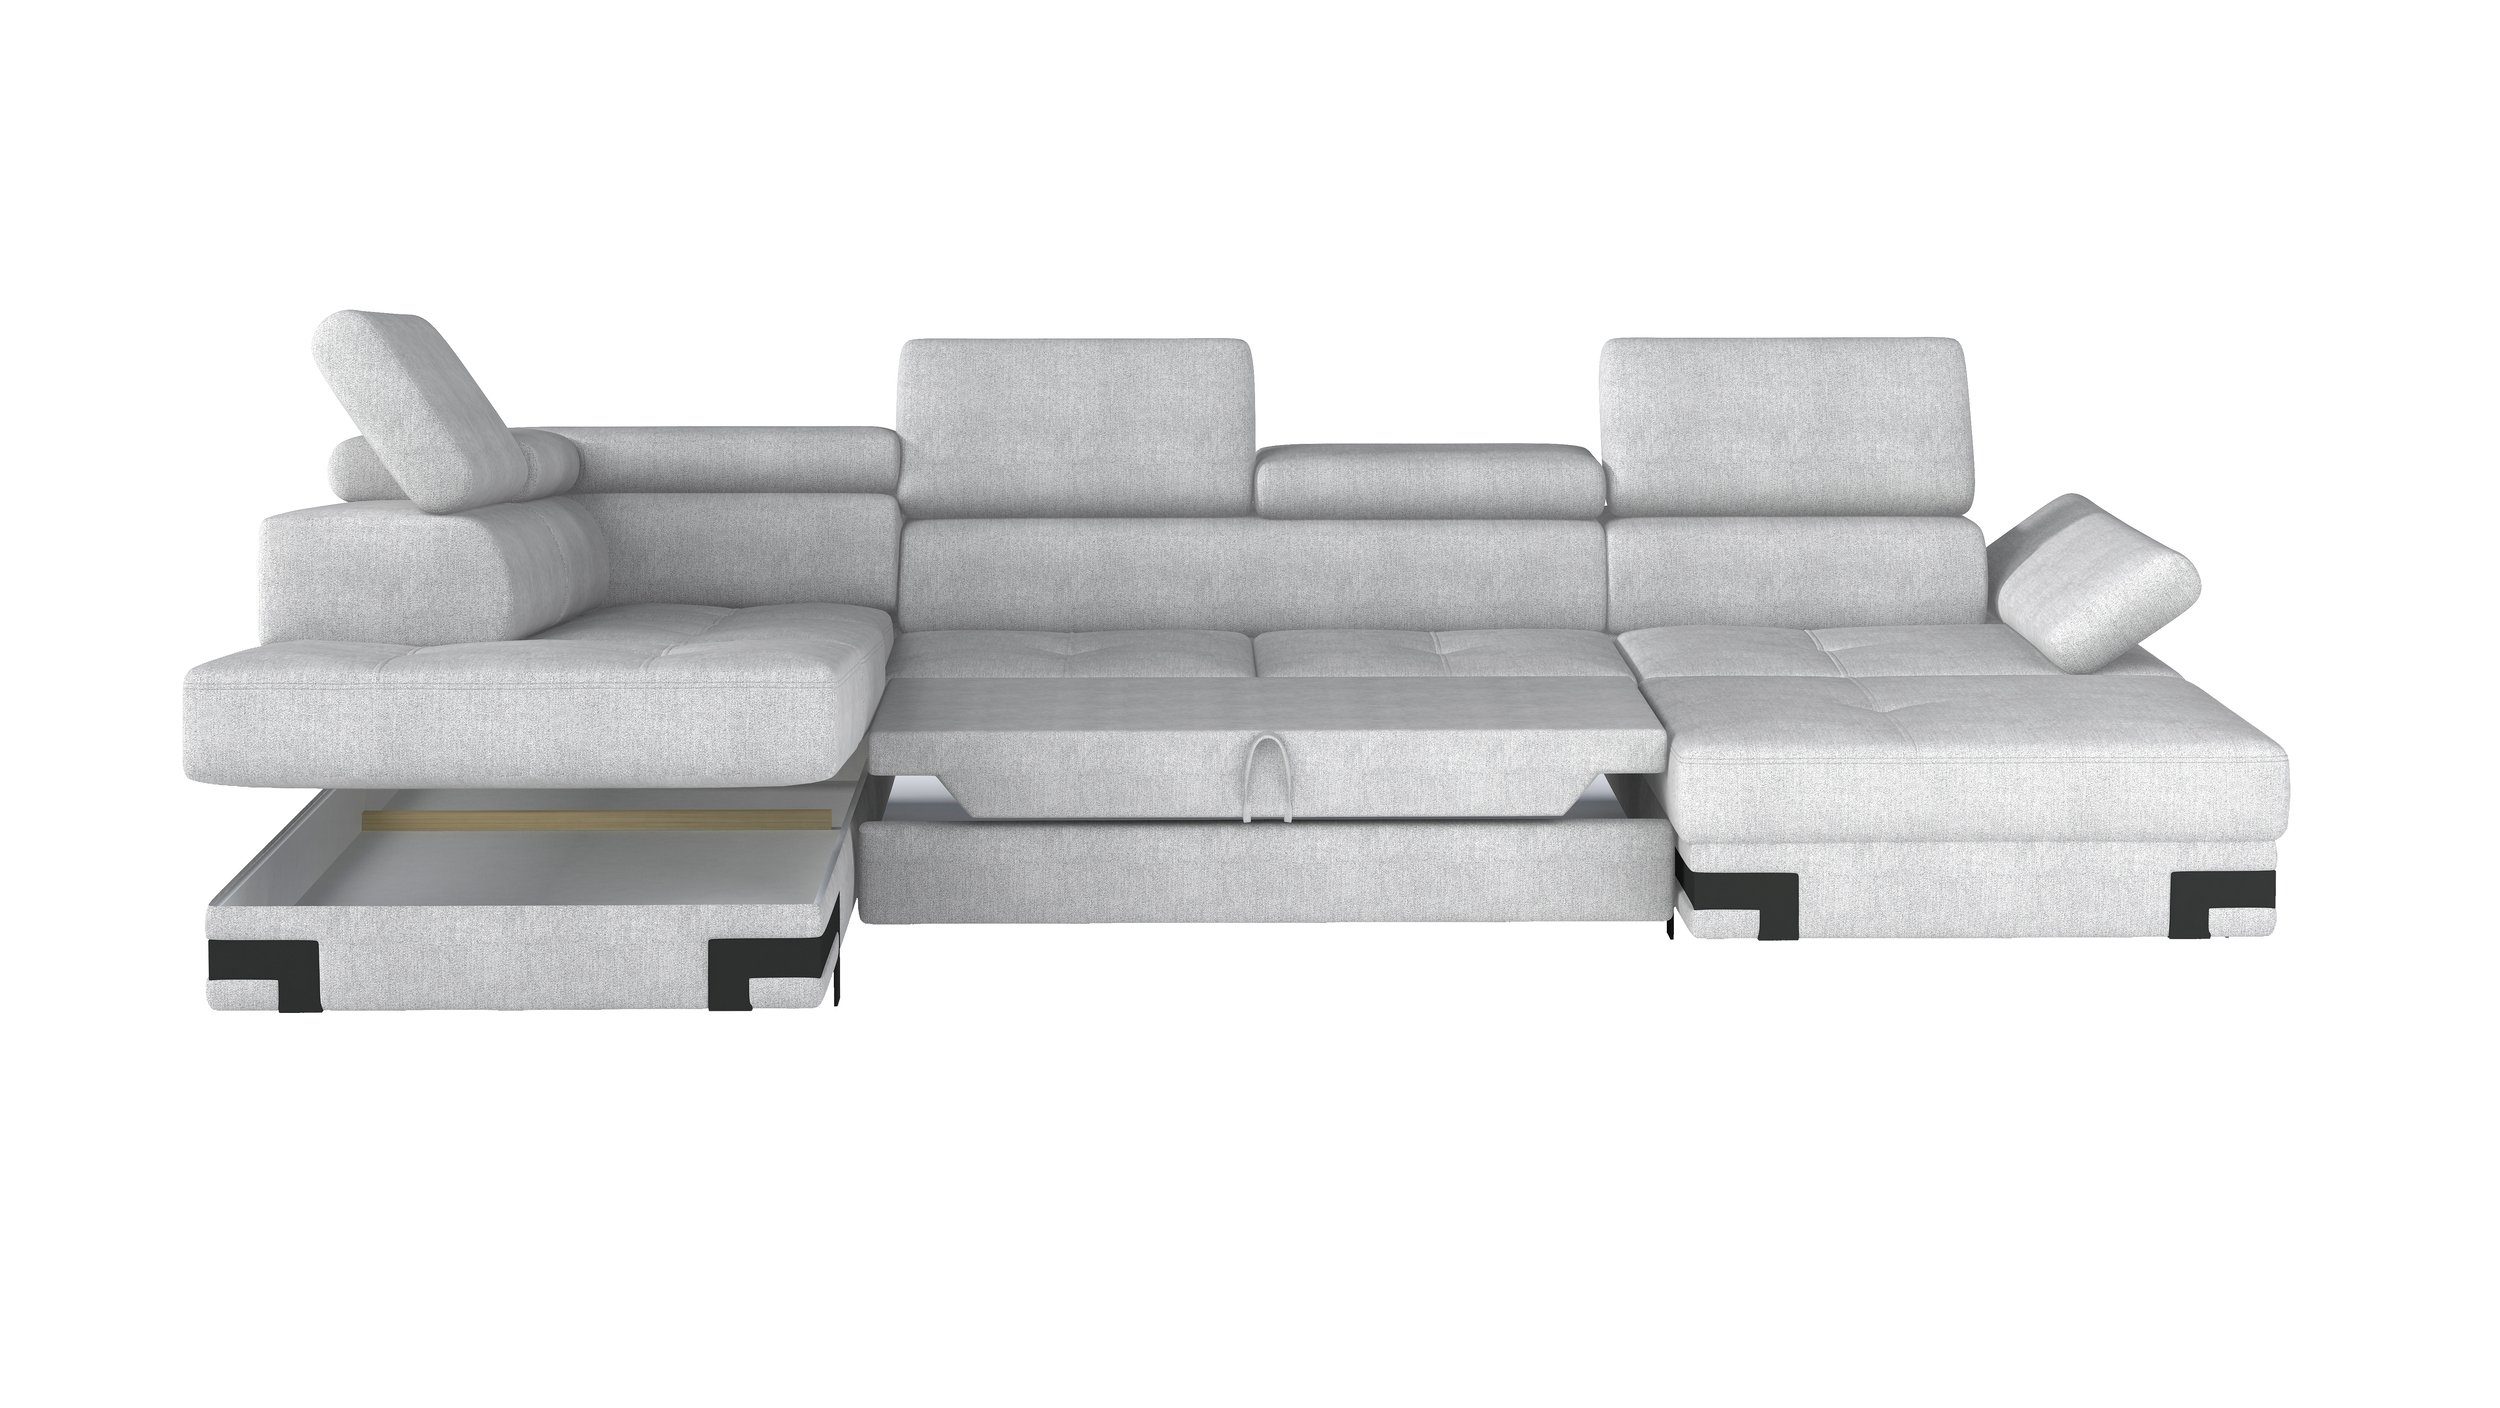 links Design Stylefy oder bestellbar, rechts XL, mit Modern mane Sofa, U-Form, Relaxfunktion, Rio Wohnlandschaft Bettfunktion,